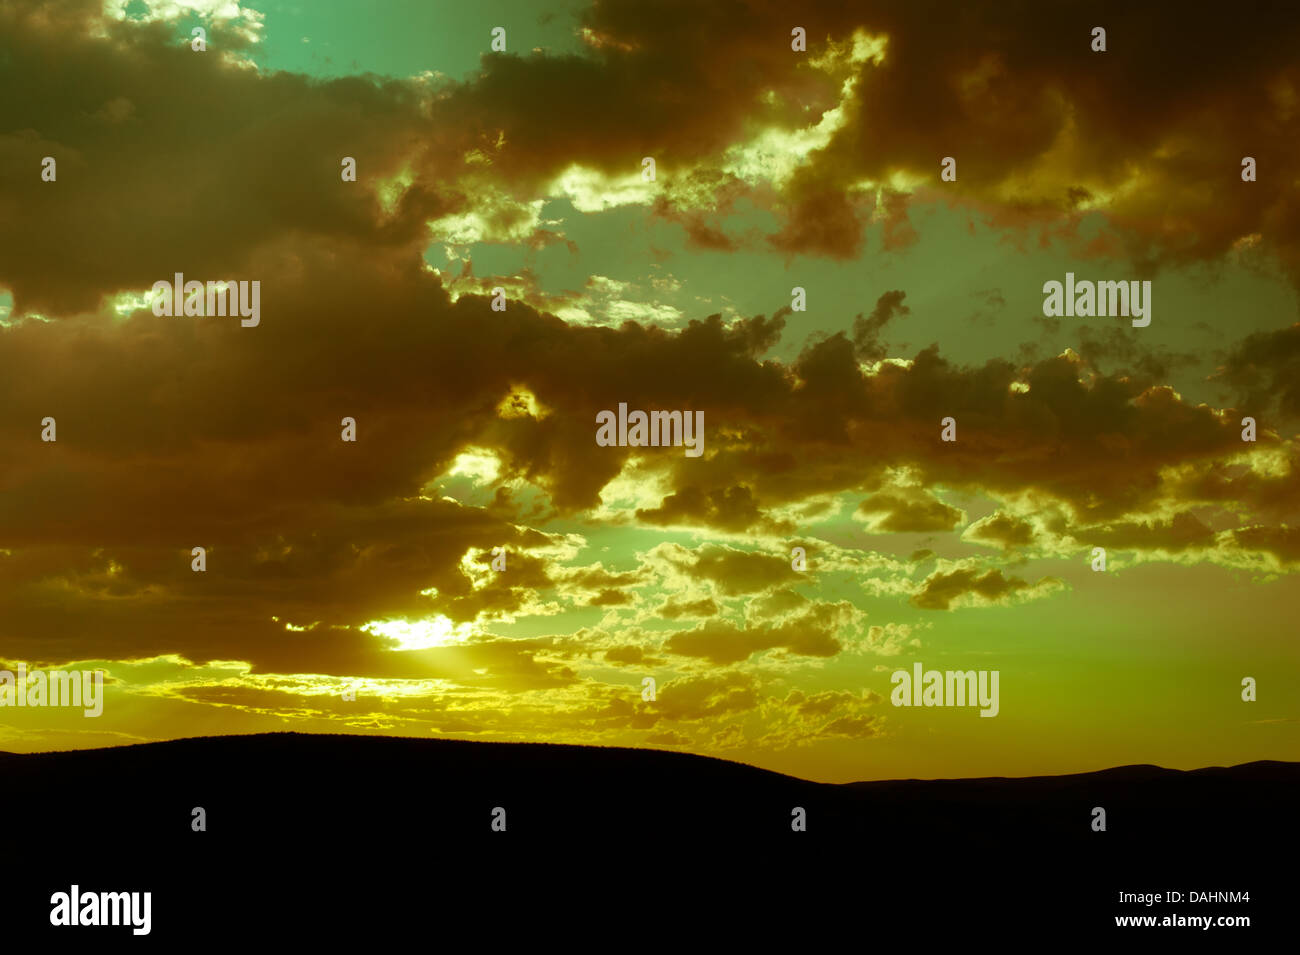 Bel tramonto in campagna con cielo molto nuvoloso Foto Stock